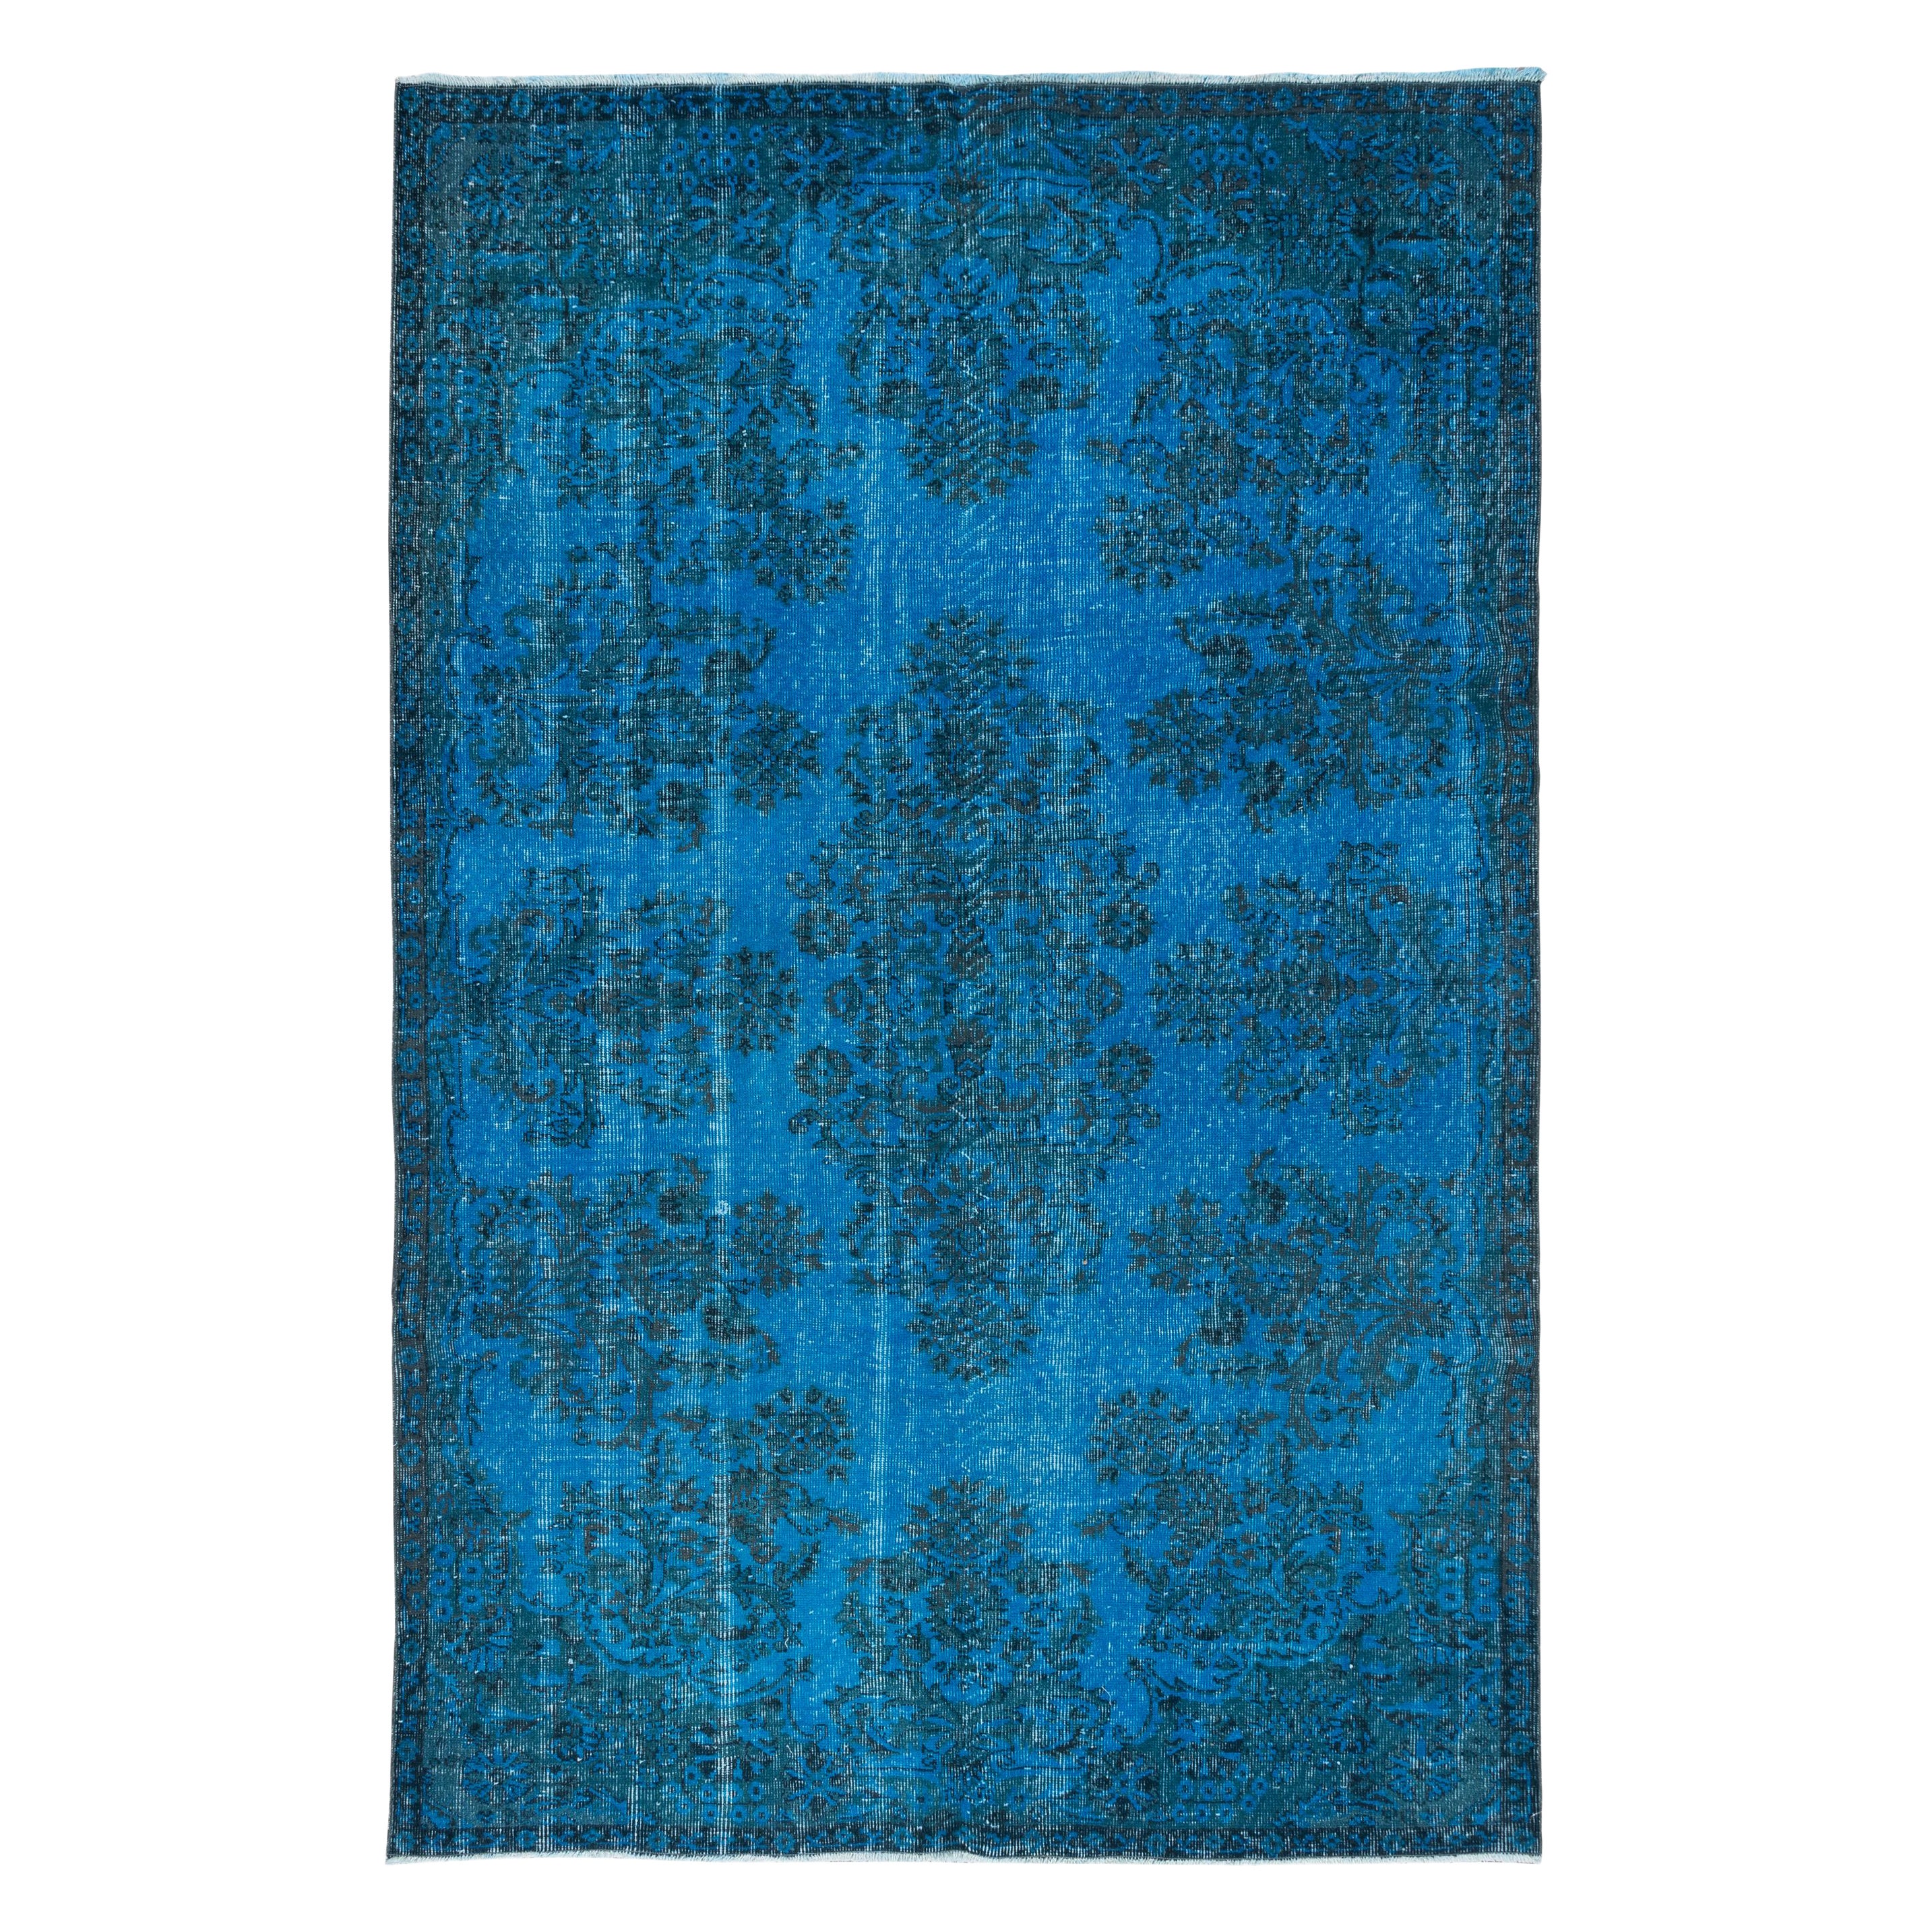 5.6x8.6 Ft Blue Modern Area Rug from Turkey, Handmade Carpet for Living Room (tapis fait main pour le salon)